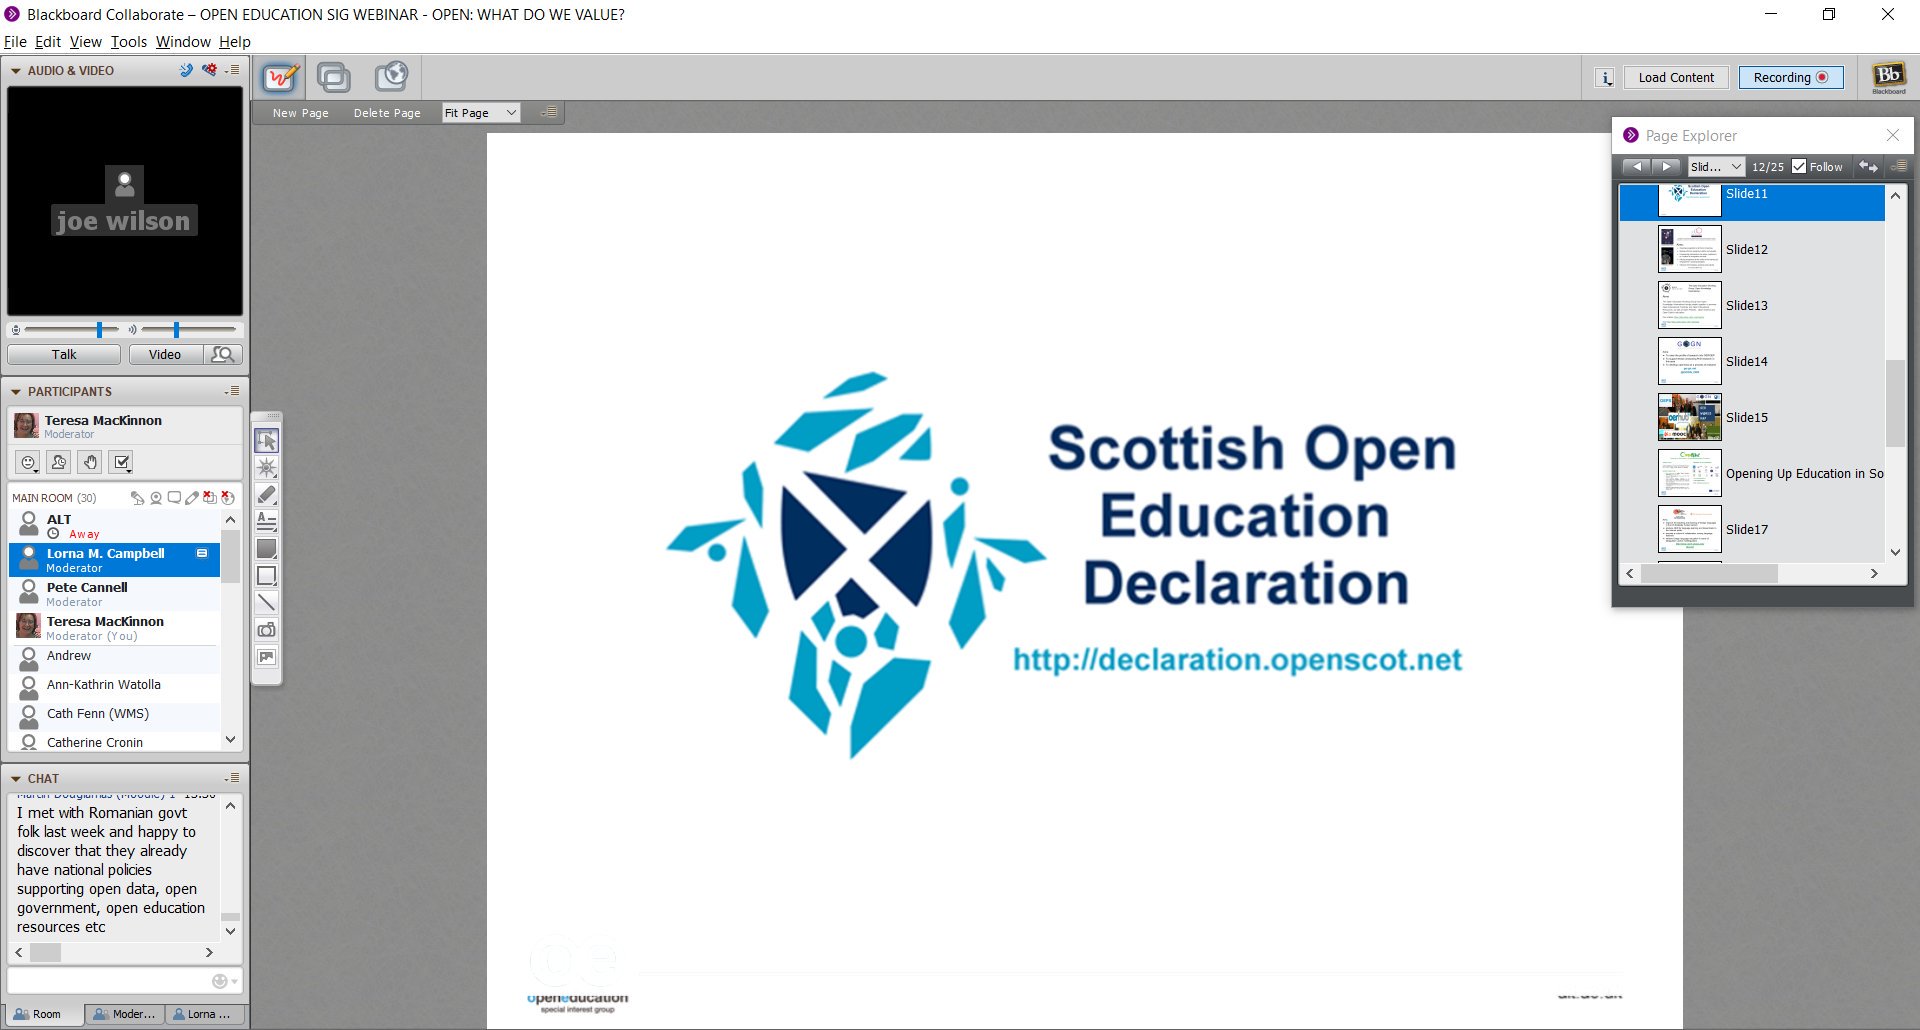 Scotland rocking the #openedsig webinar - great team contribution #altc thanks @joecar @LornaMCampbell https://t.co/JiFzEvkANP